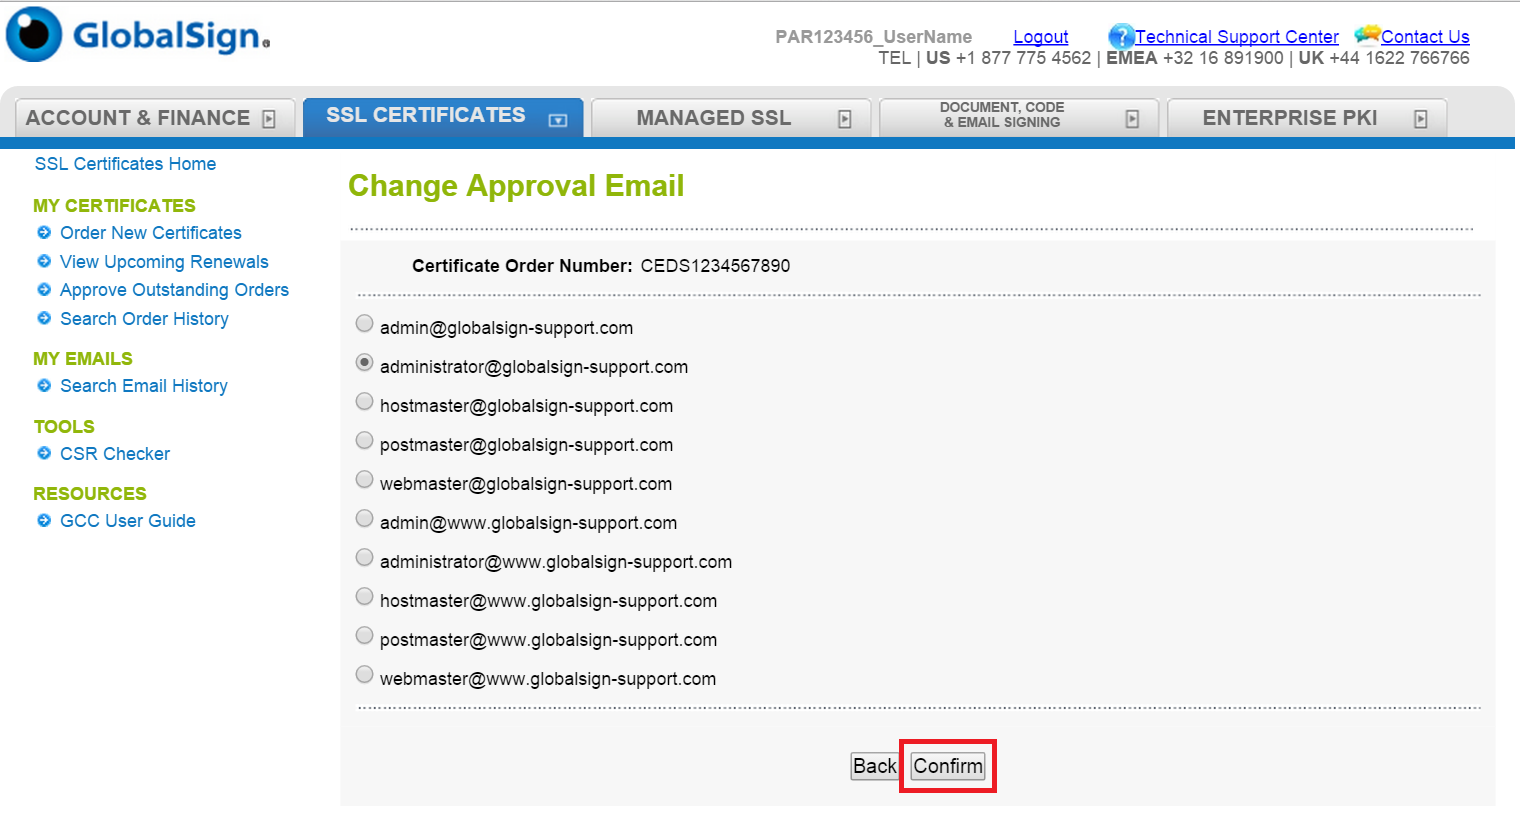 GCC_-_SSL_Certificates_-_Change_Approval_Email_-_Confirm_Button.png